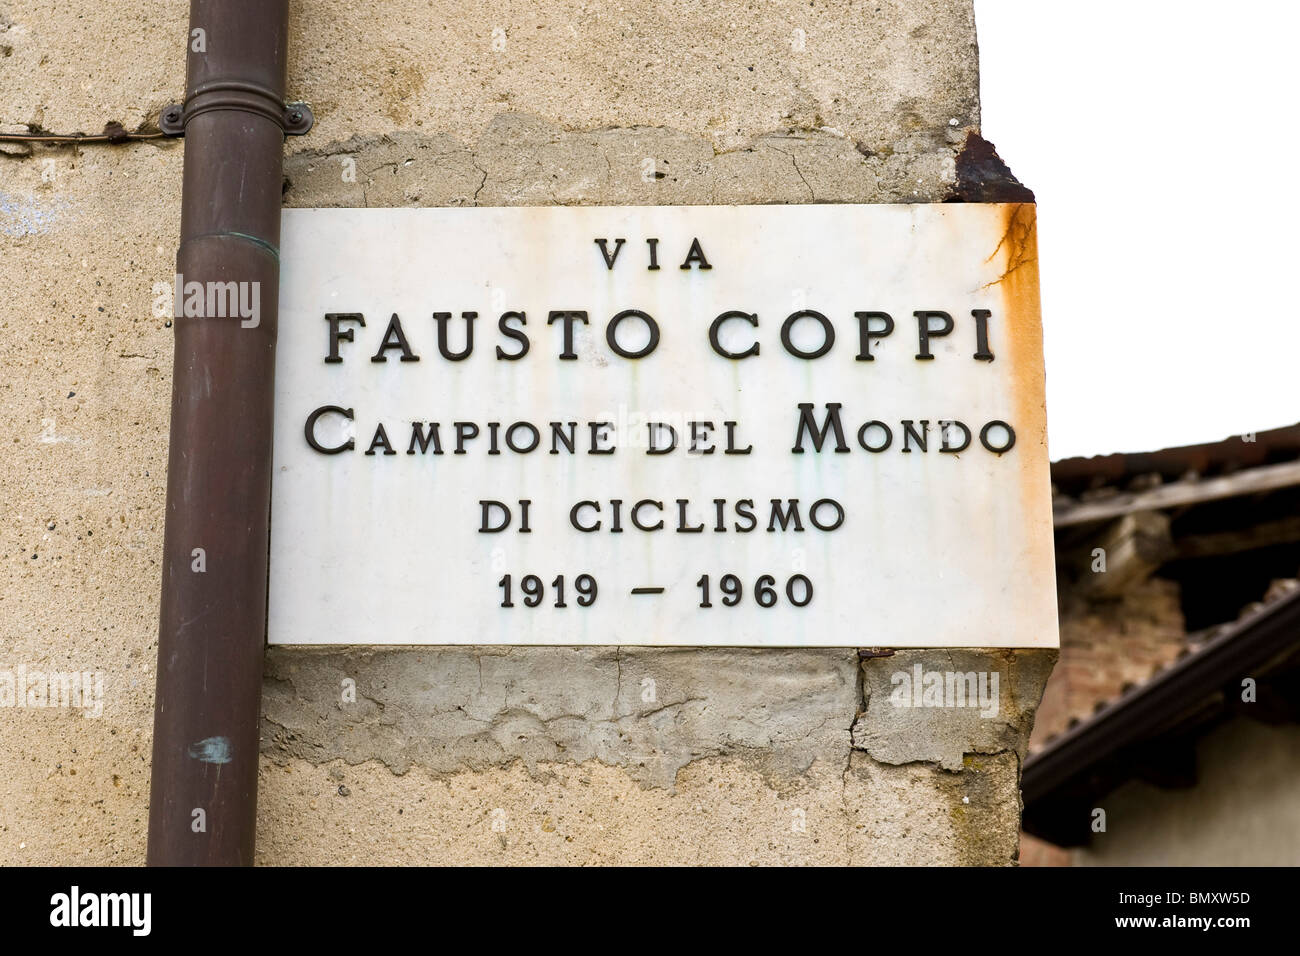 Memorial Fausto Coppi, Castellania, Alessandria province, Italy  Stock Photo